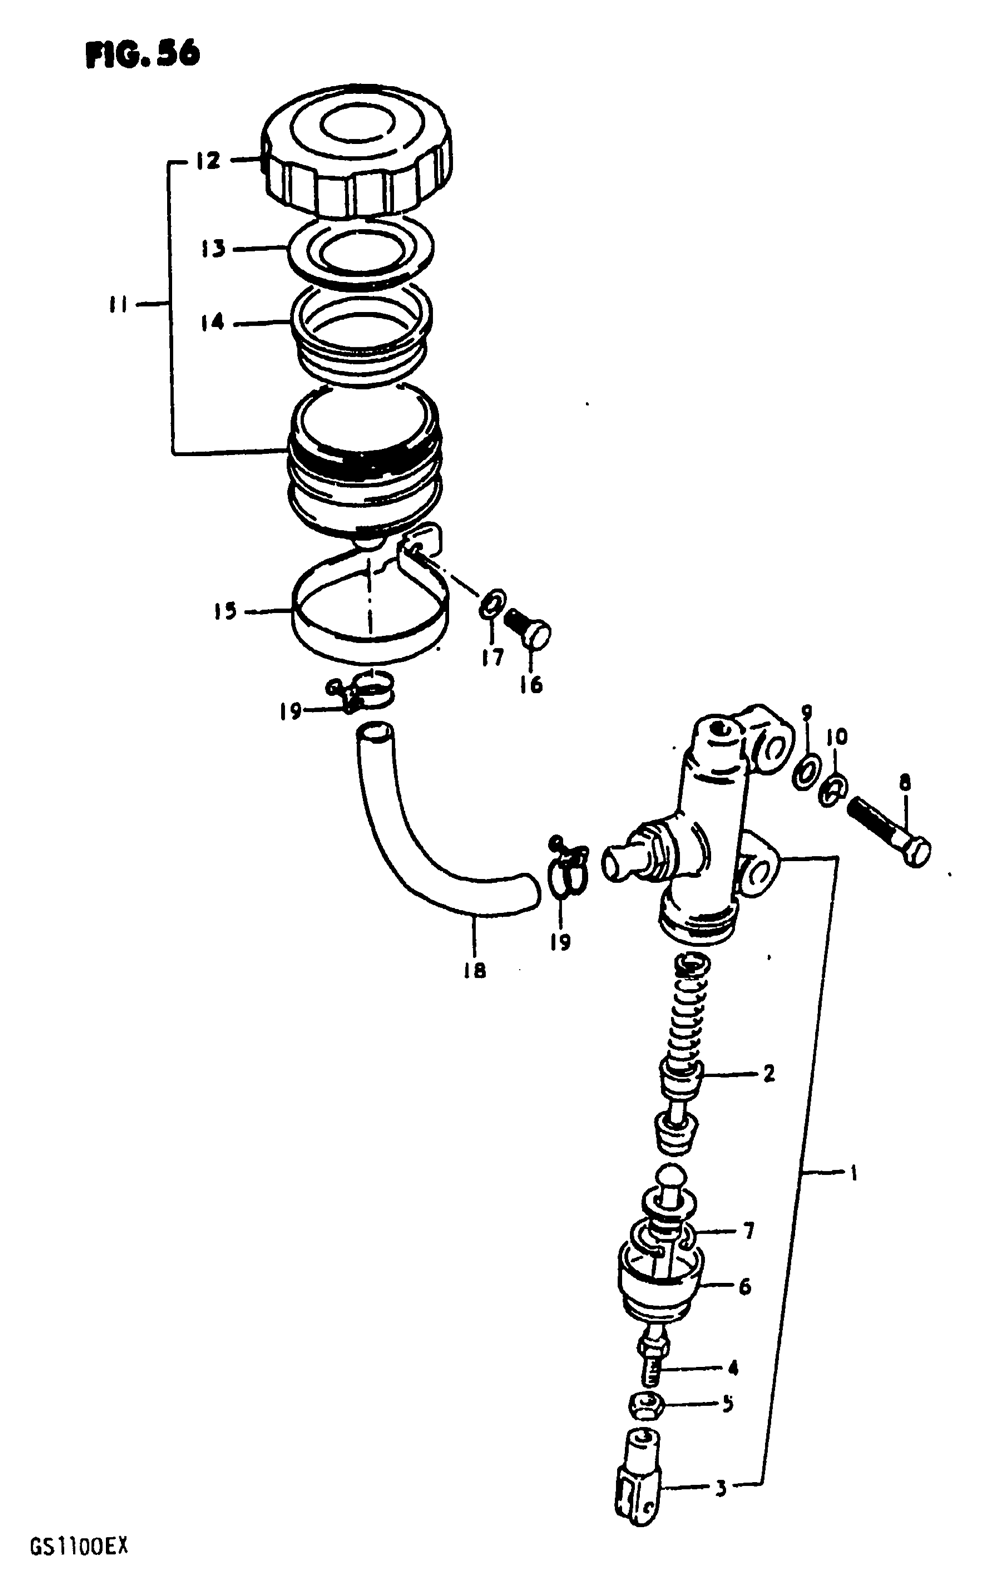 Rear master cylinder (gs1100ex)